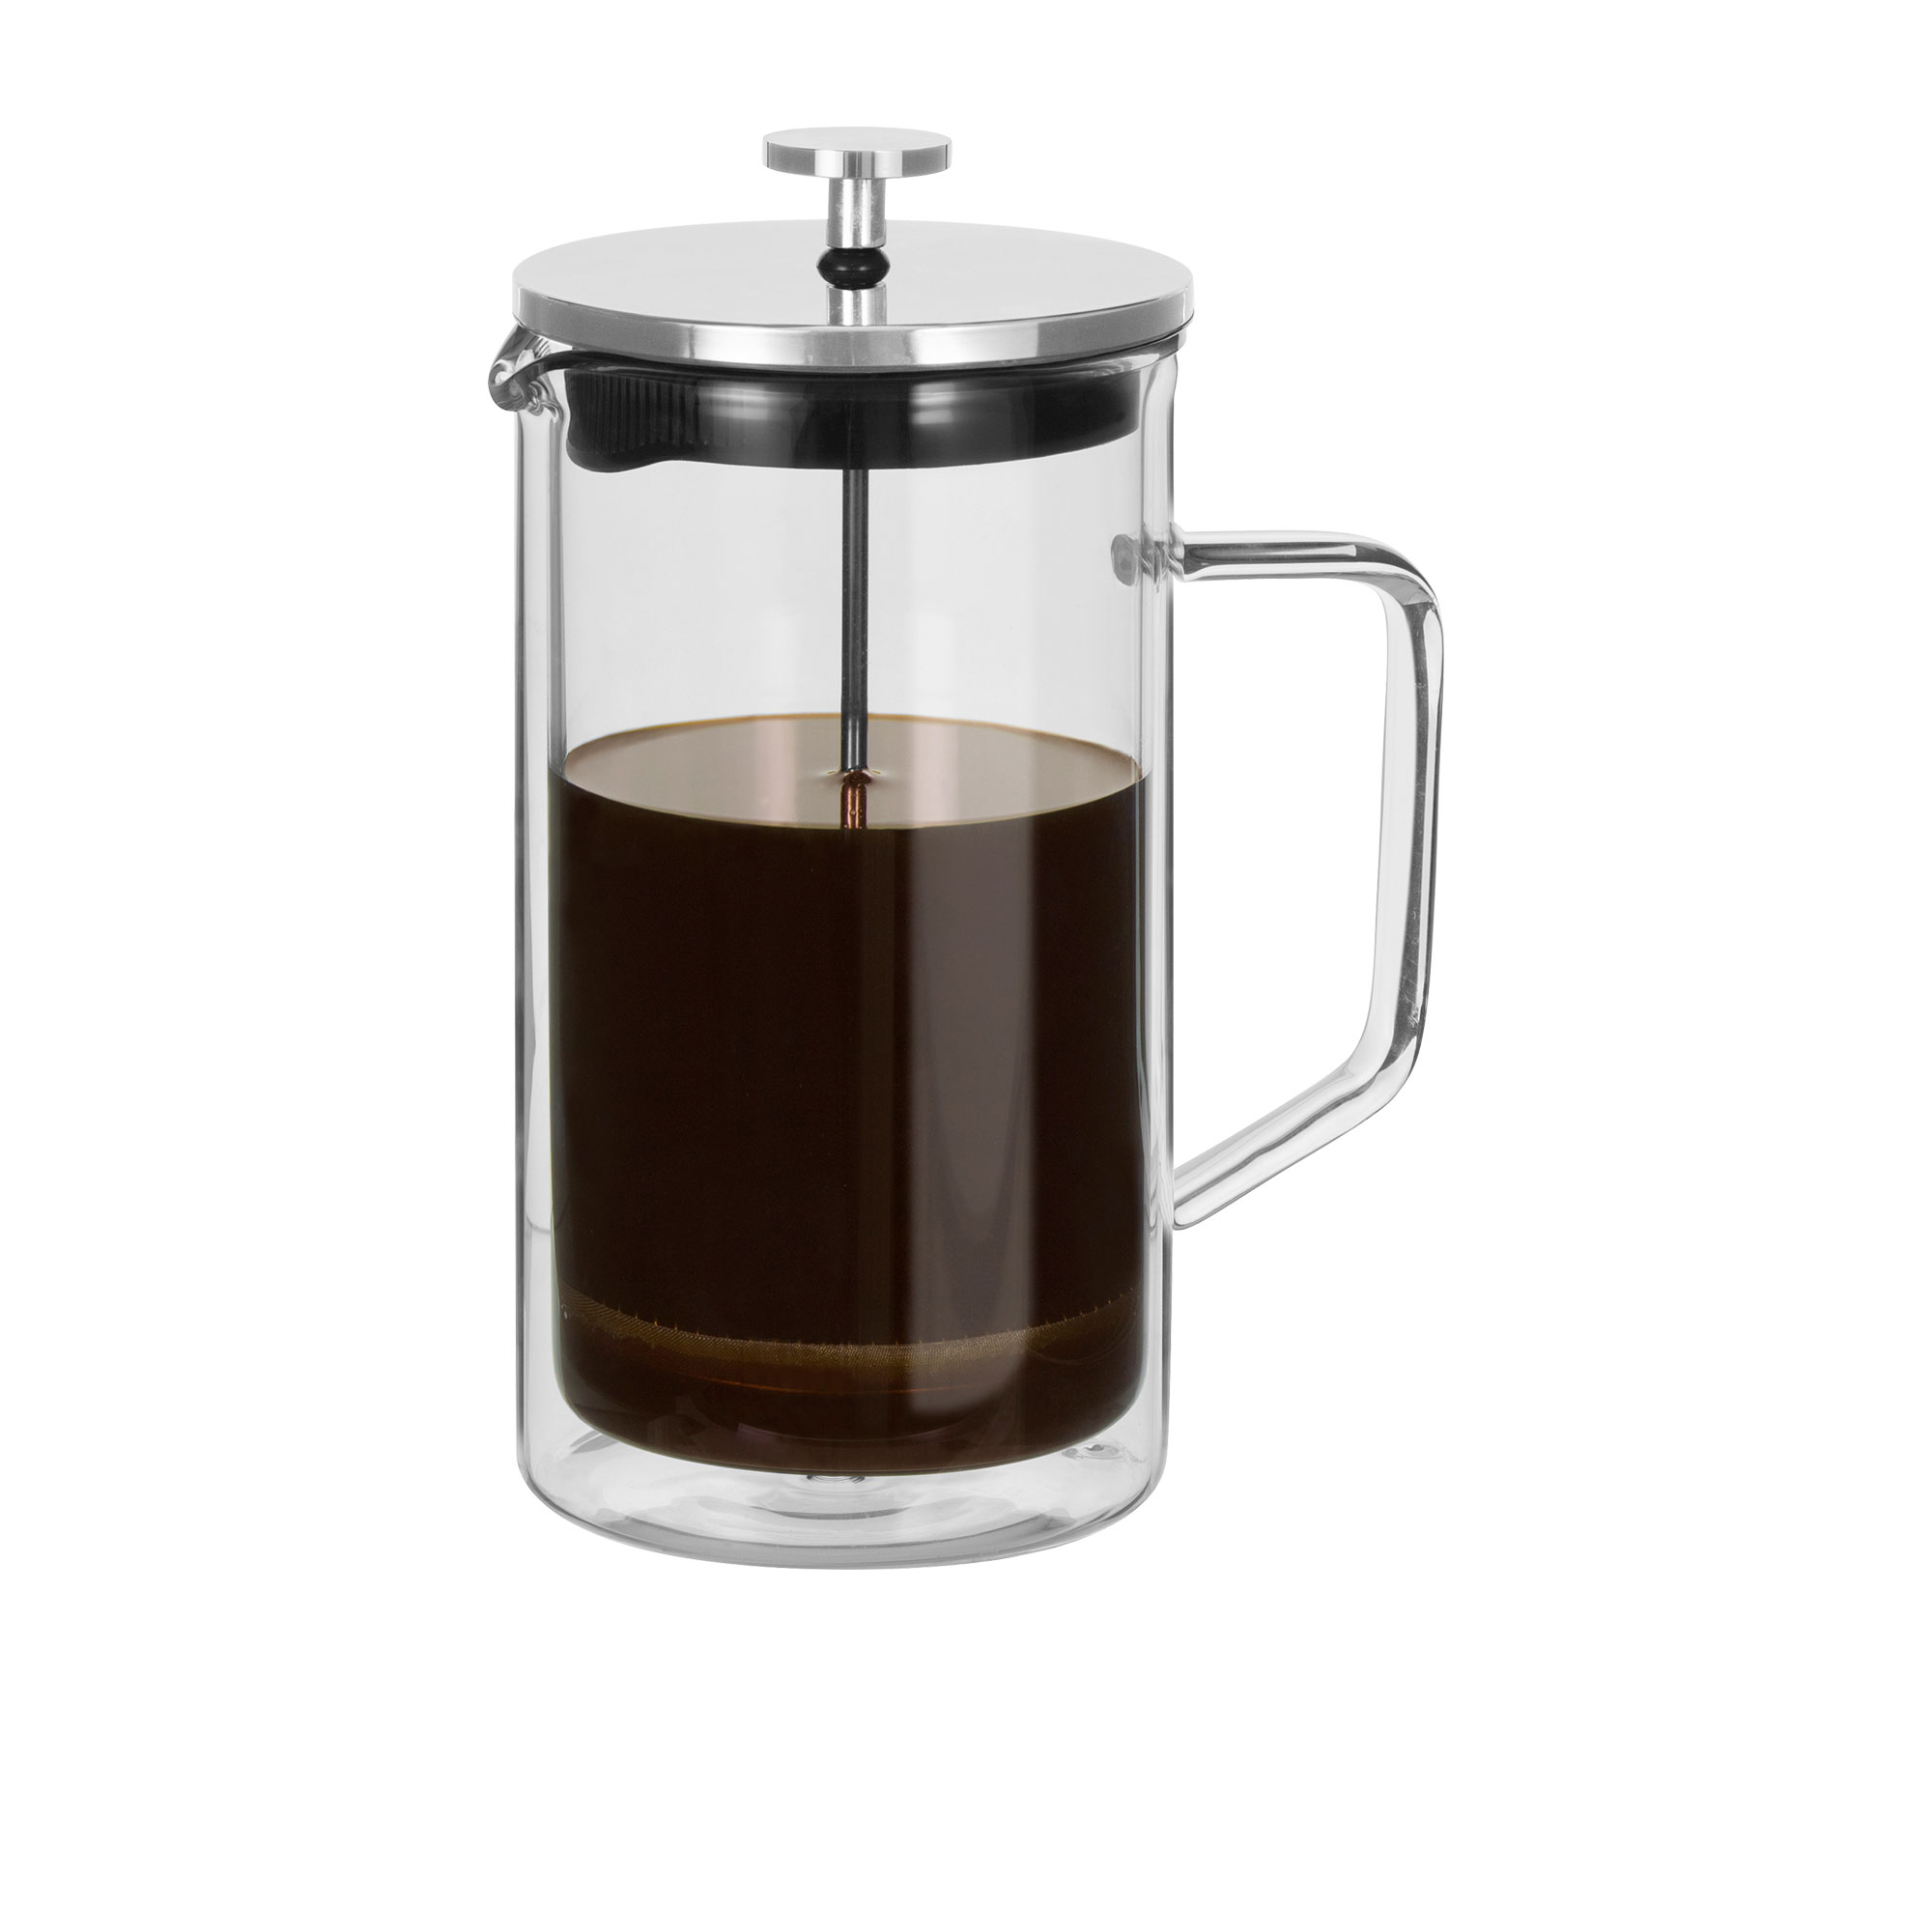 Avanti Capri Double Wall Coffee Plunger 8 Cup Image 1